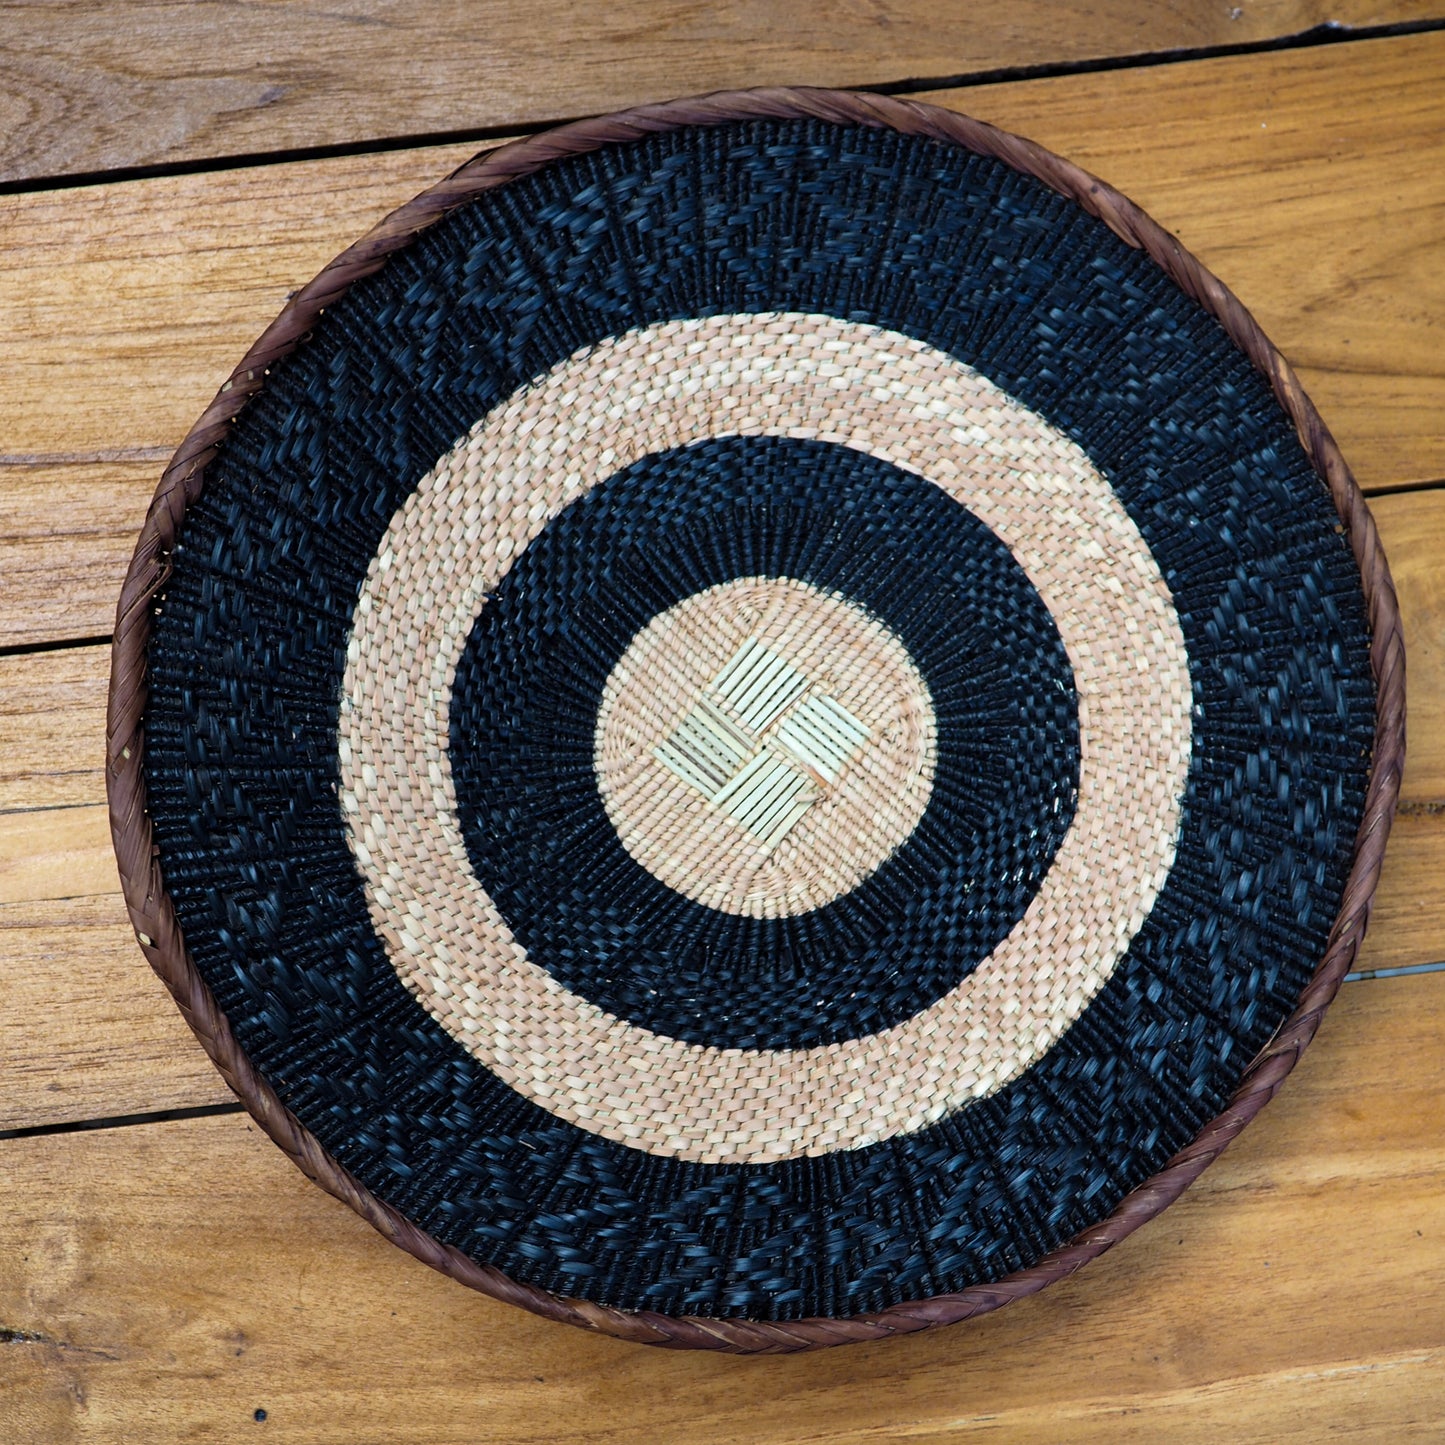 Tonga Basket Painted - Extra Small / Small